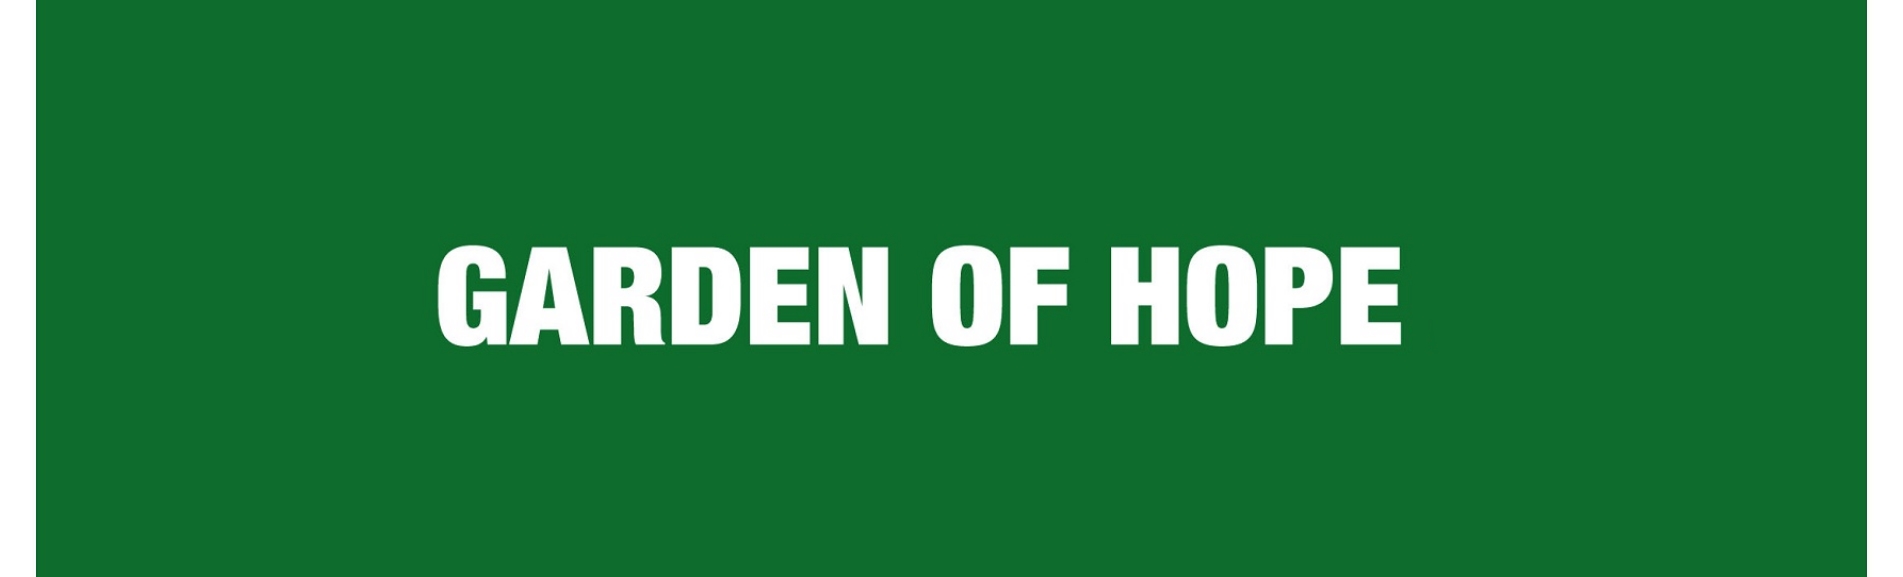 garden of hope 2019 operation restore hope